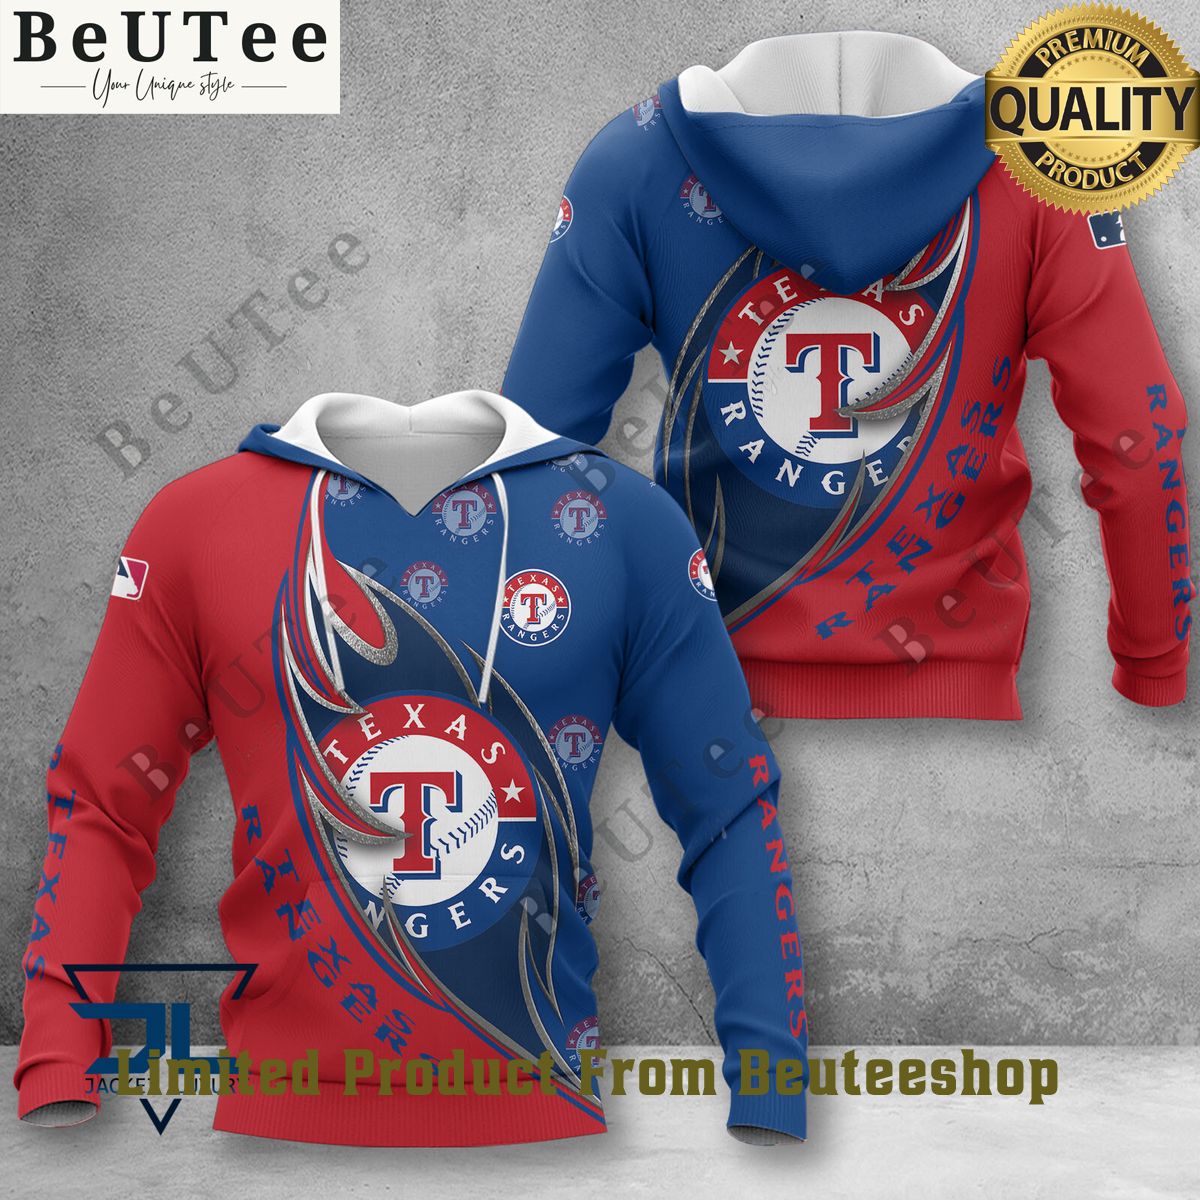 texas rangers mlb baseball champion hoodie shirt 1 ZzQwF.jpg